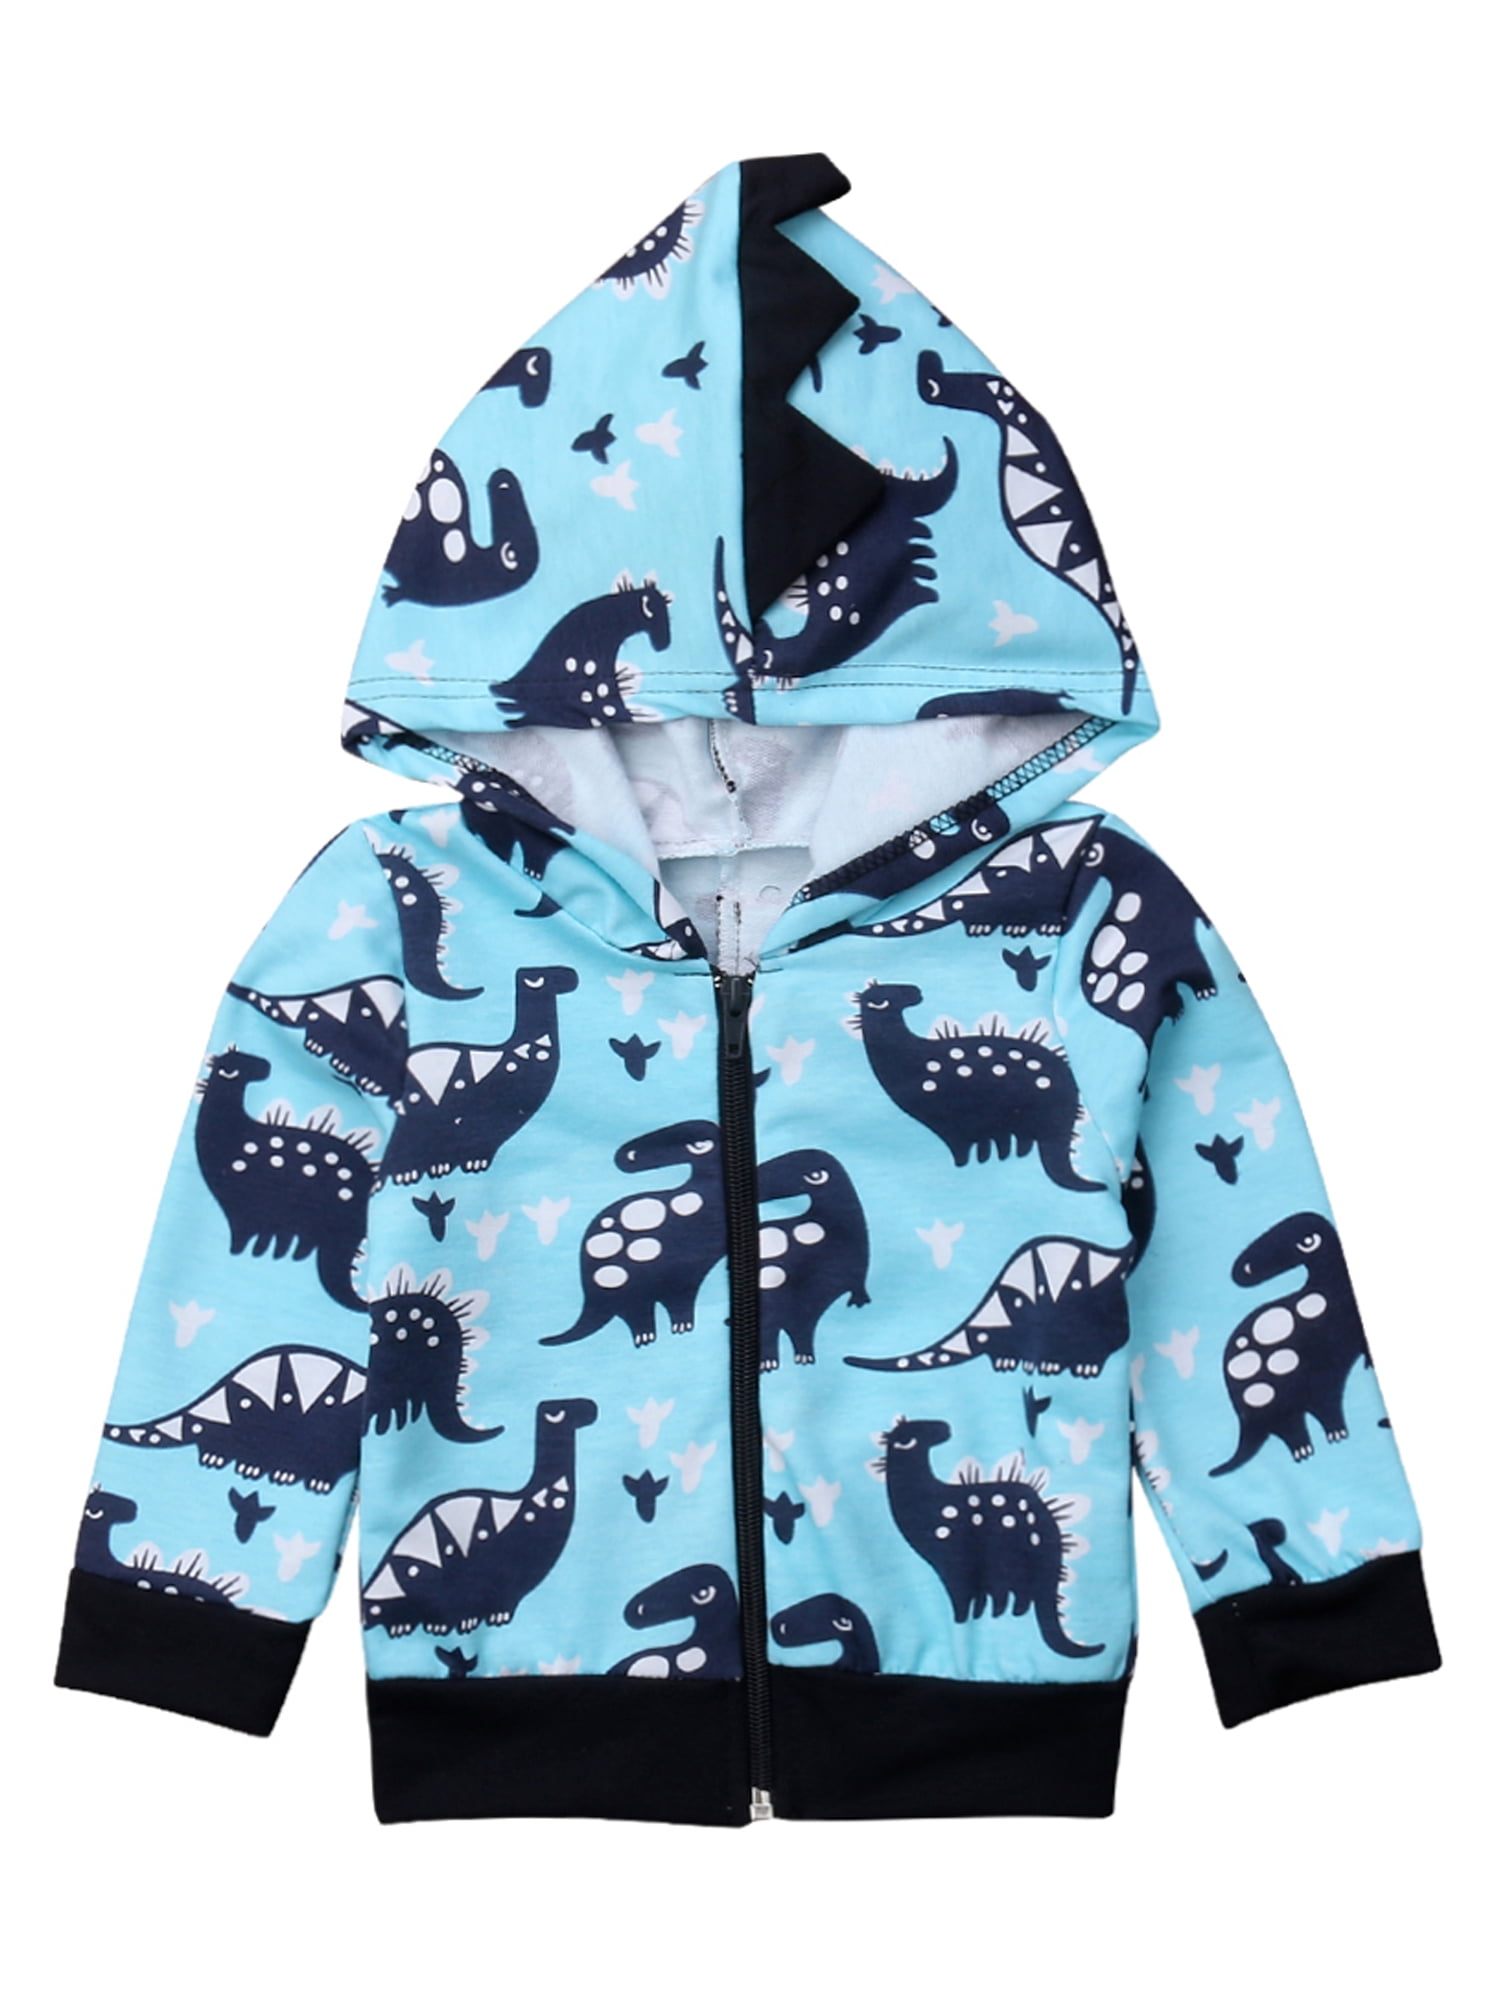 Jacket Kids Cute Dinosaur Baby Outerwear Coat Boys Kids Hooded Children Clothing 